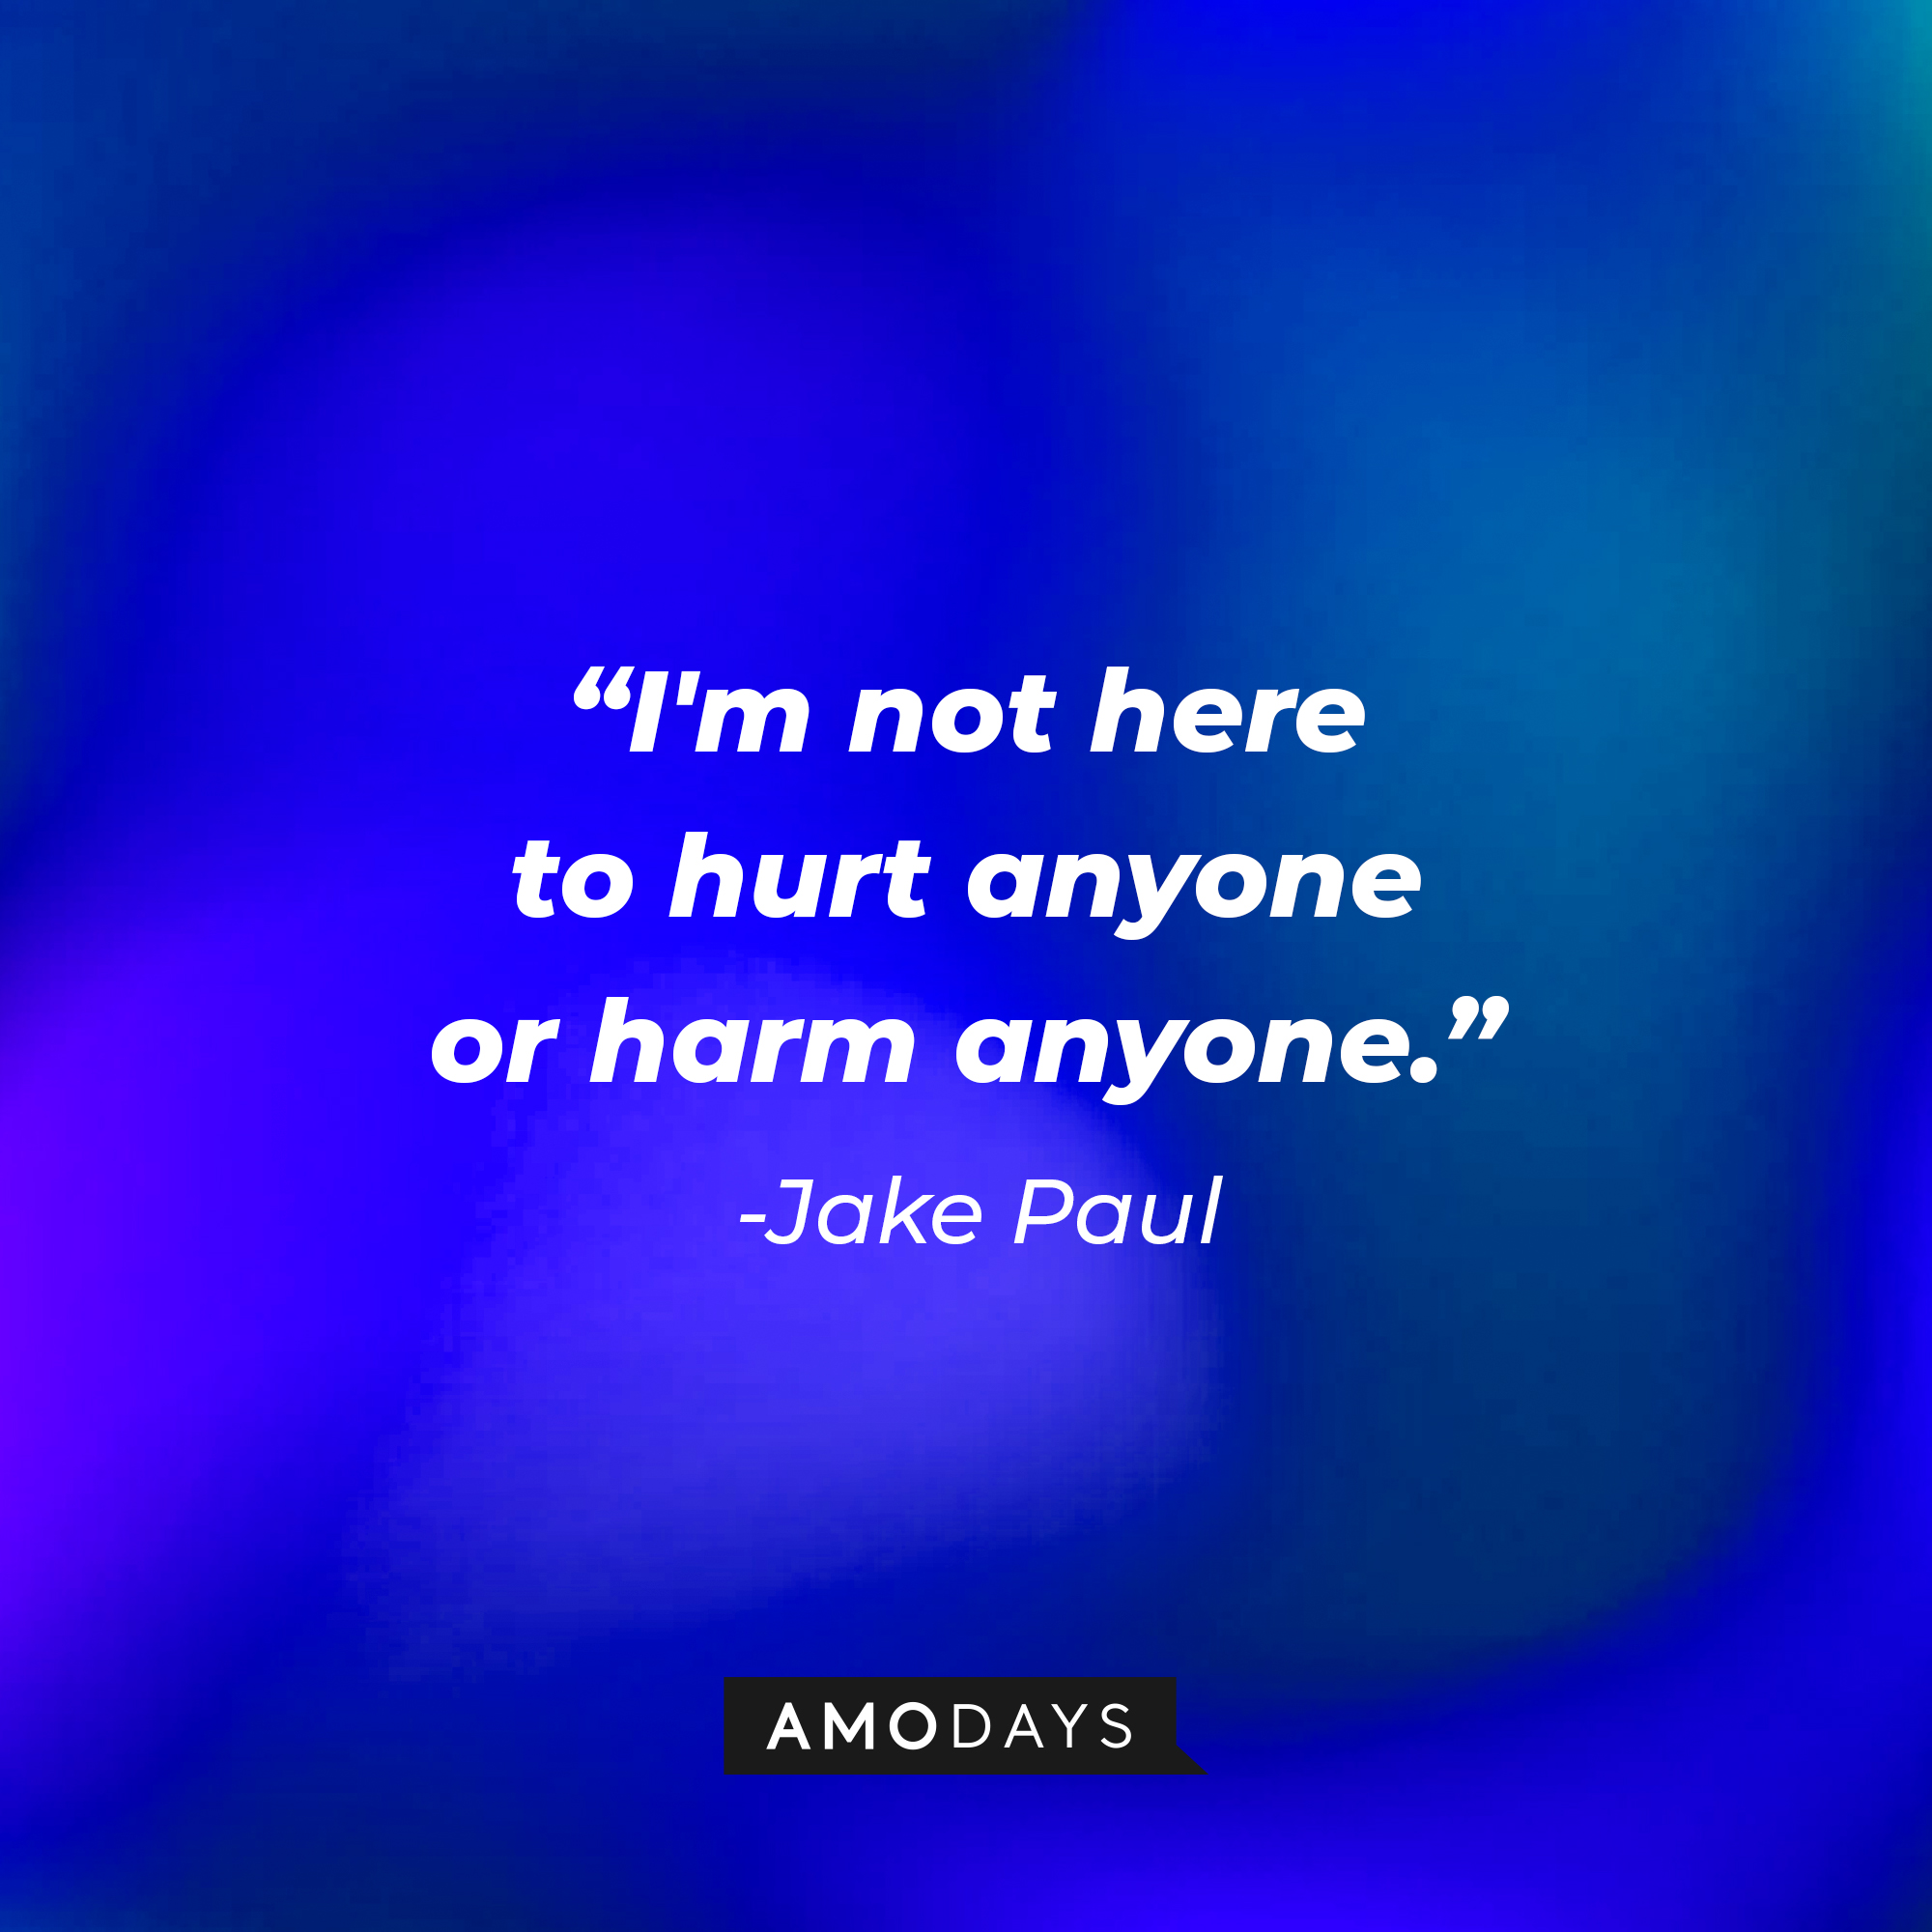 Jake Paul’s quote: "I'm not here to hurt anyone or harm anyone." | Image: Amodays